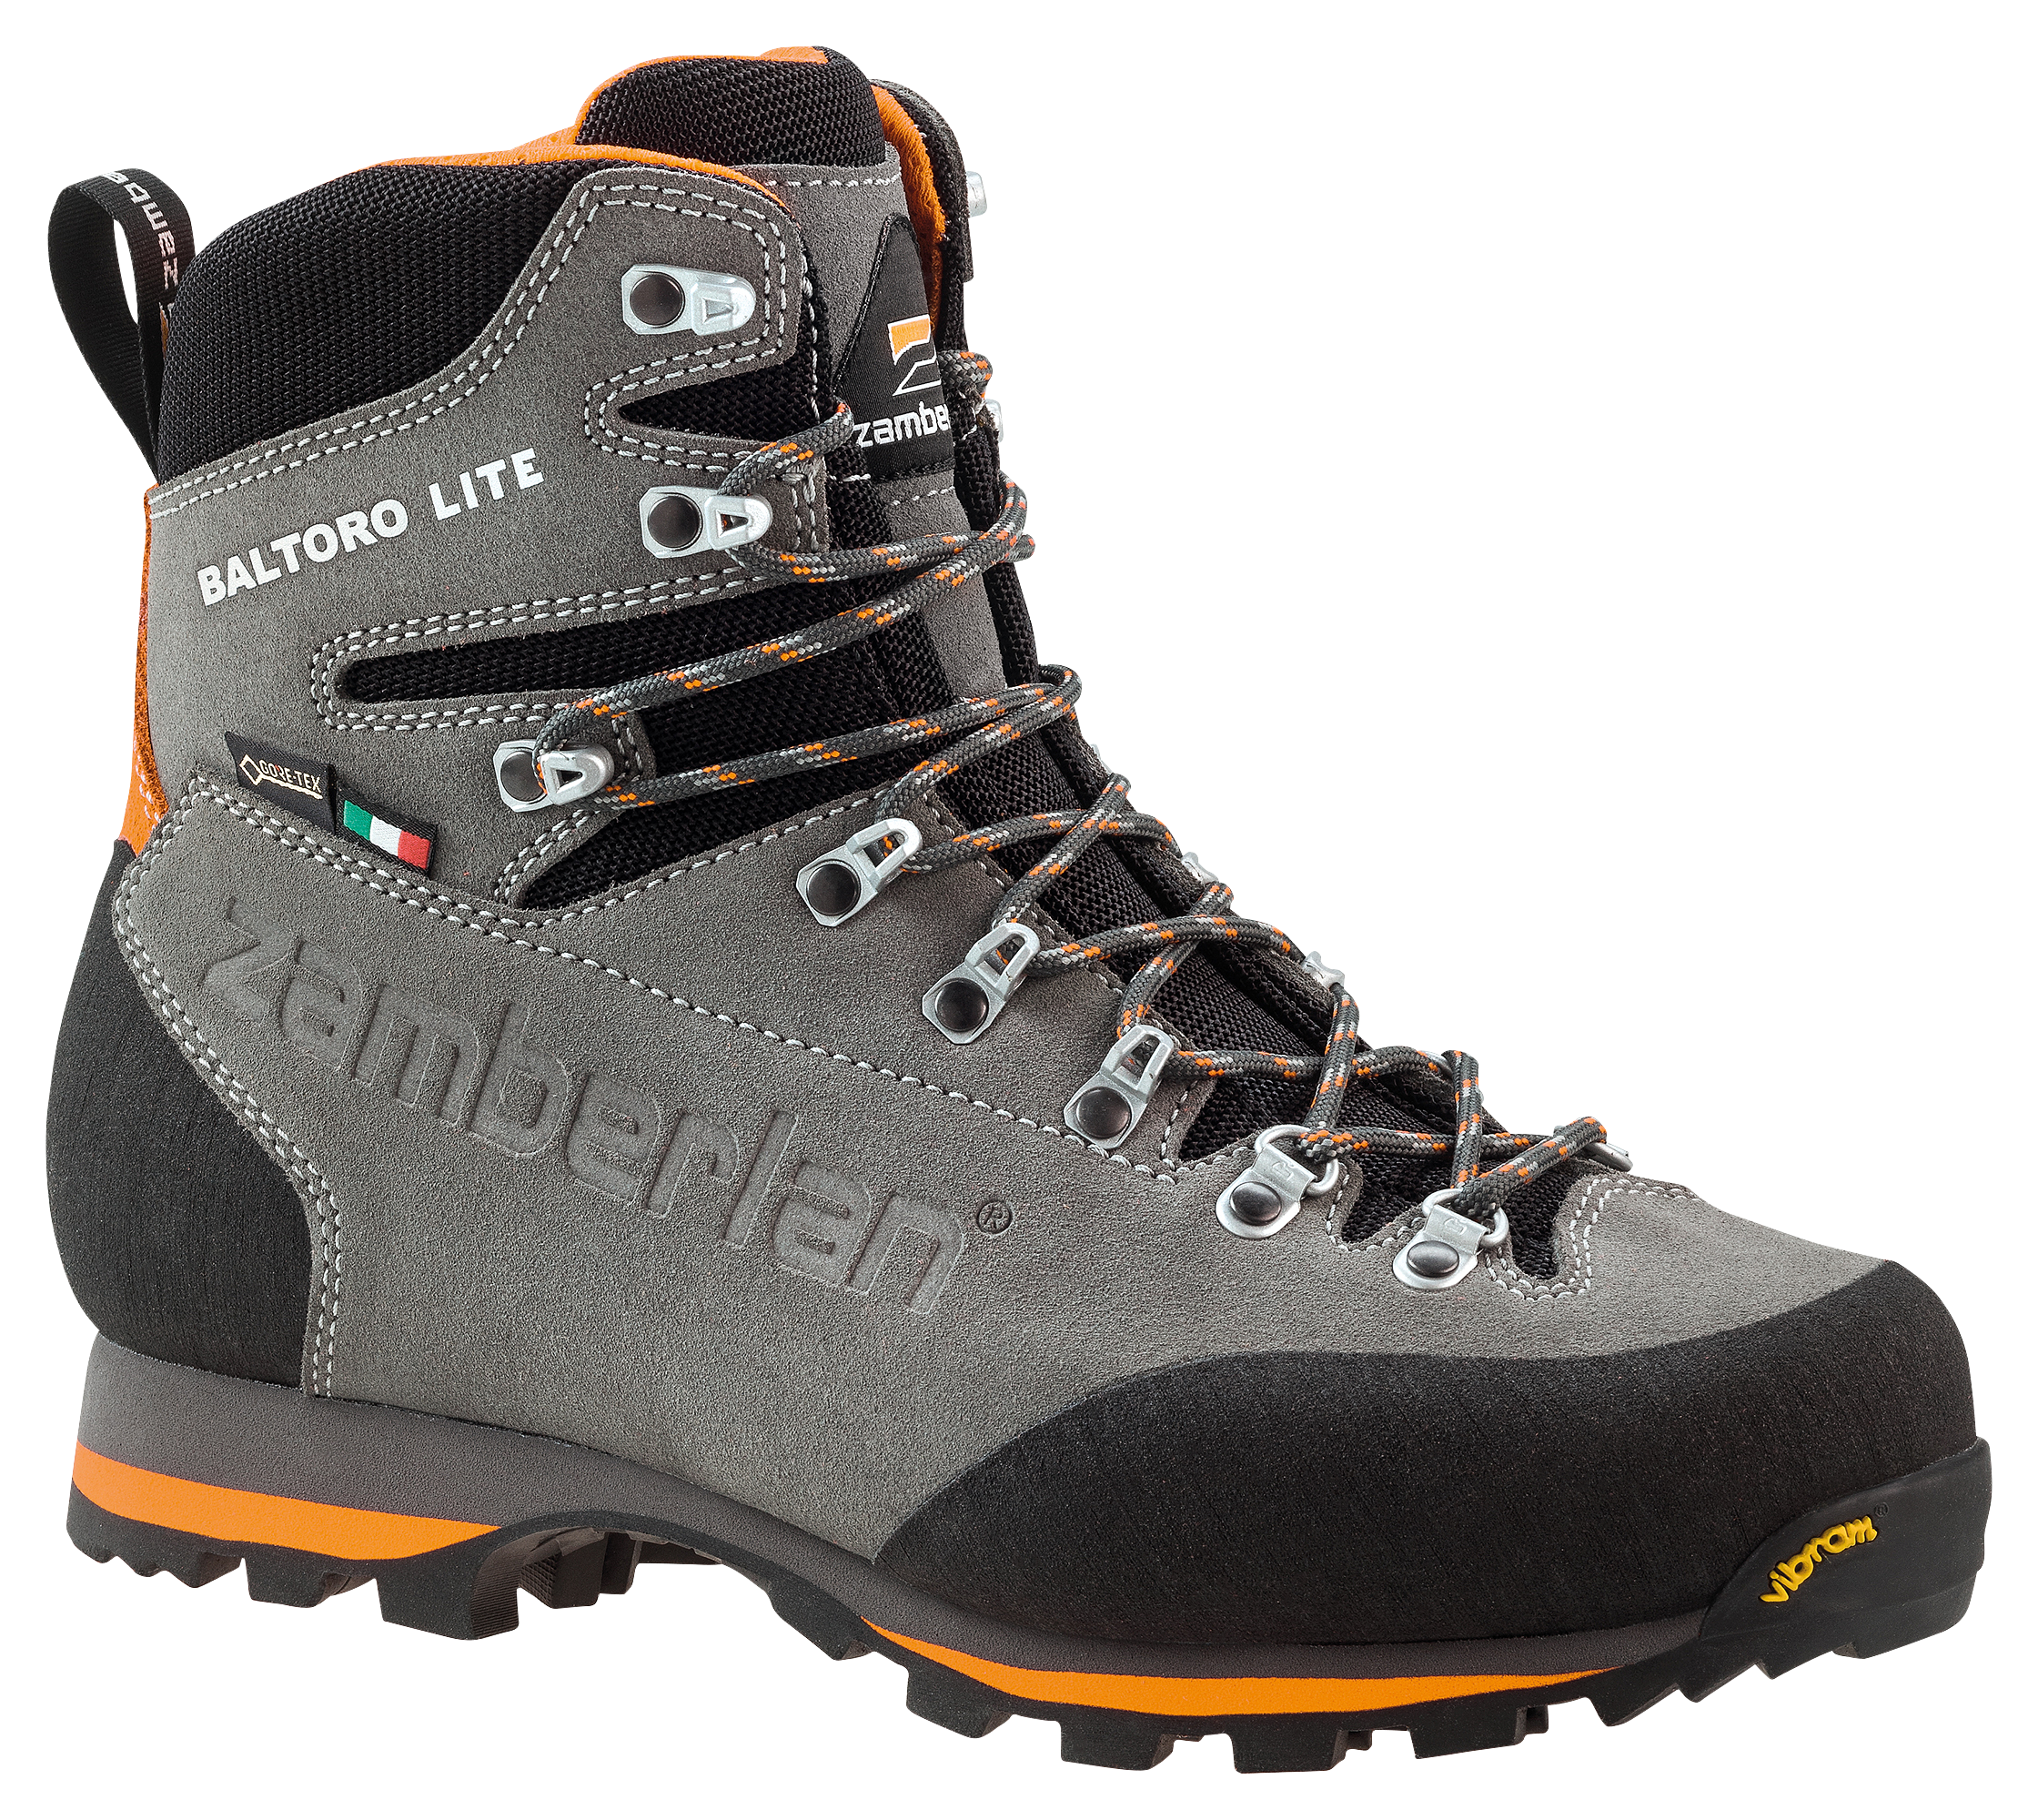 Zamberlan 1110 Baltoro Lite GTX RR Waterproof Hiking Boots for Men - Graphite/Black - 12M